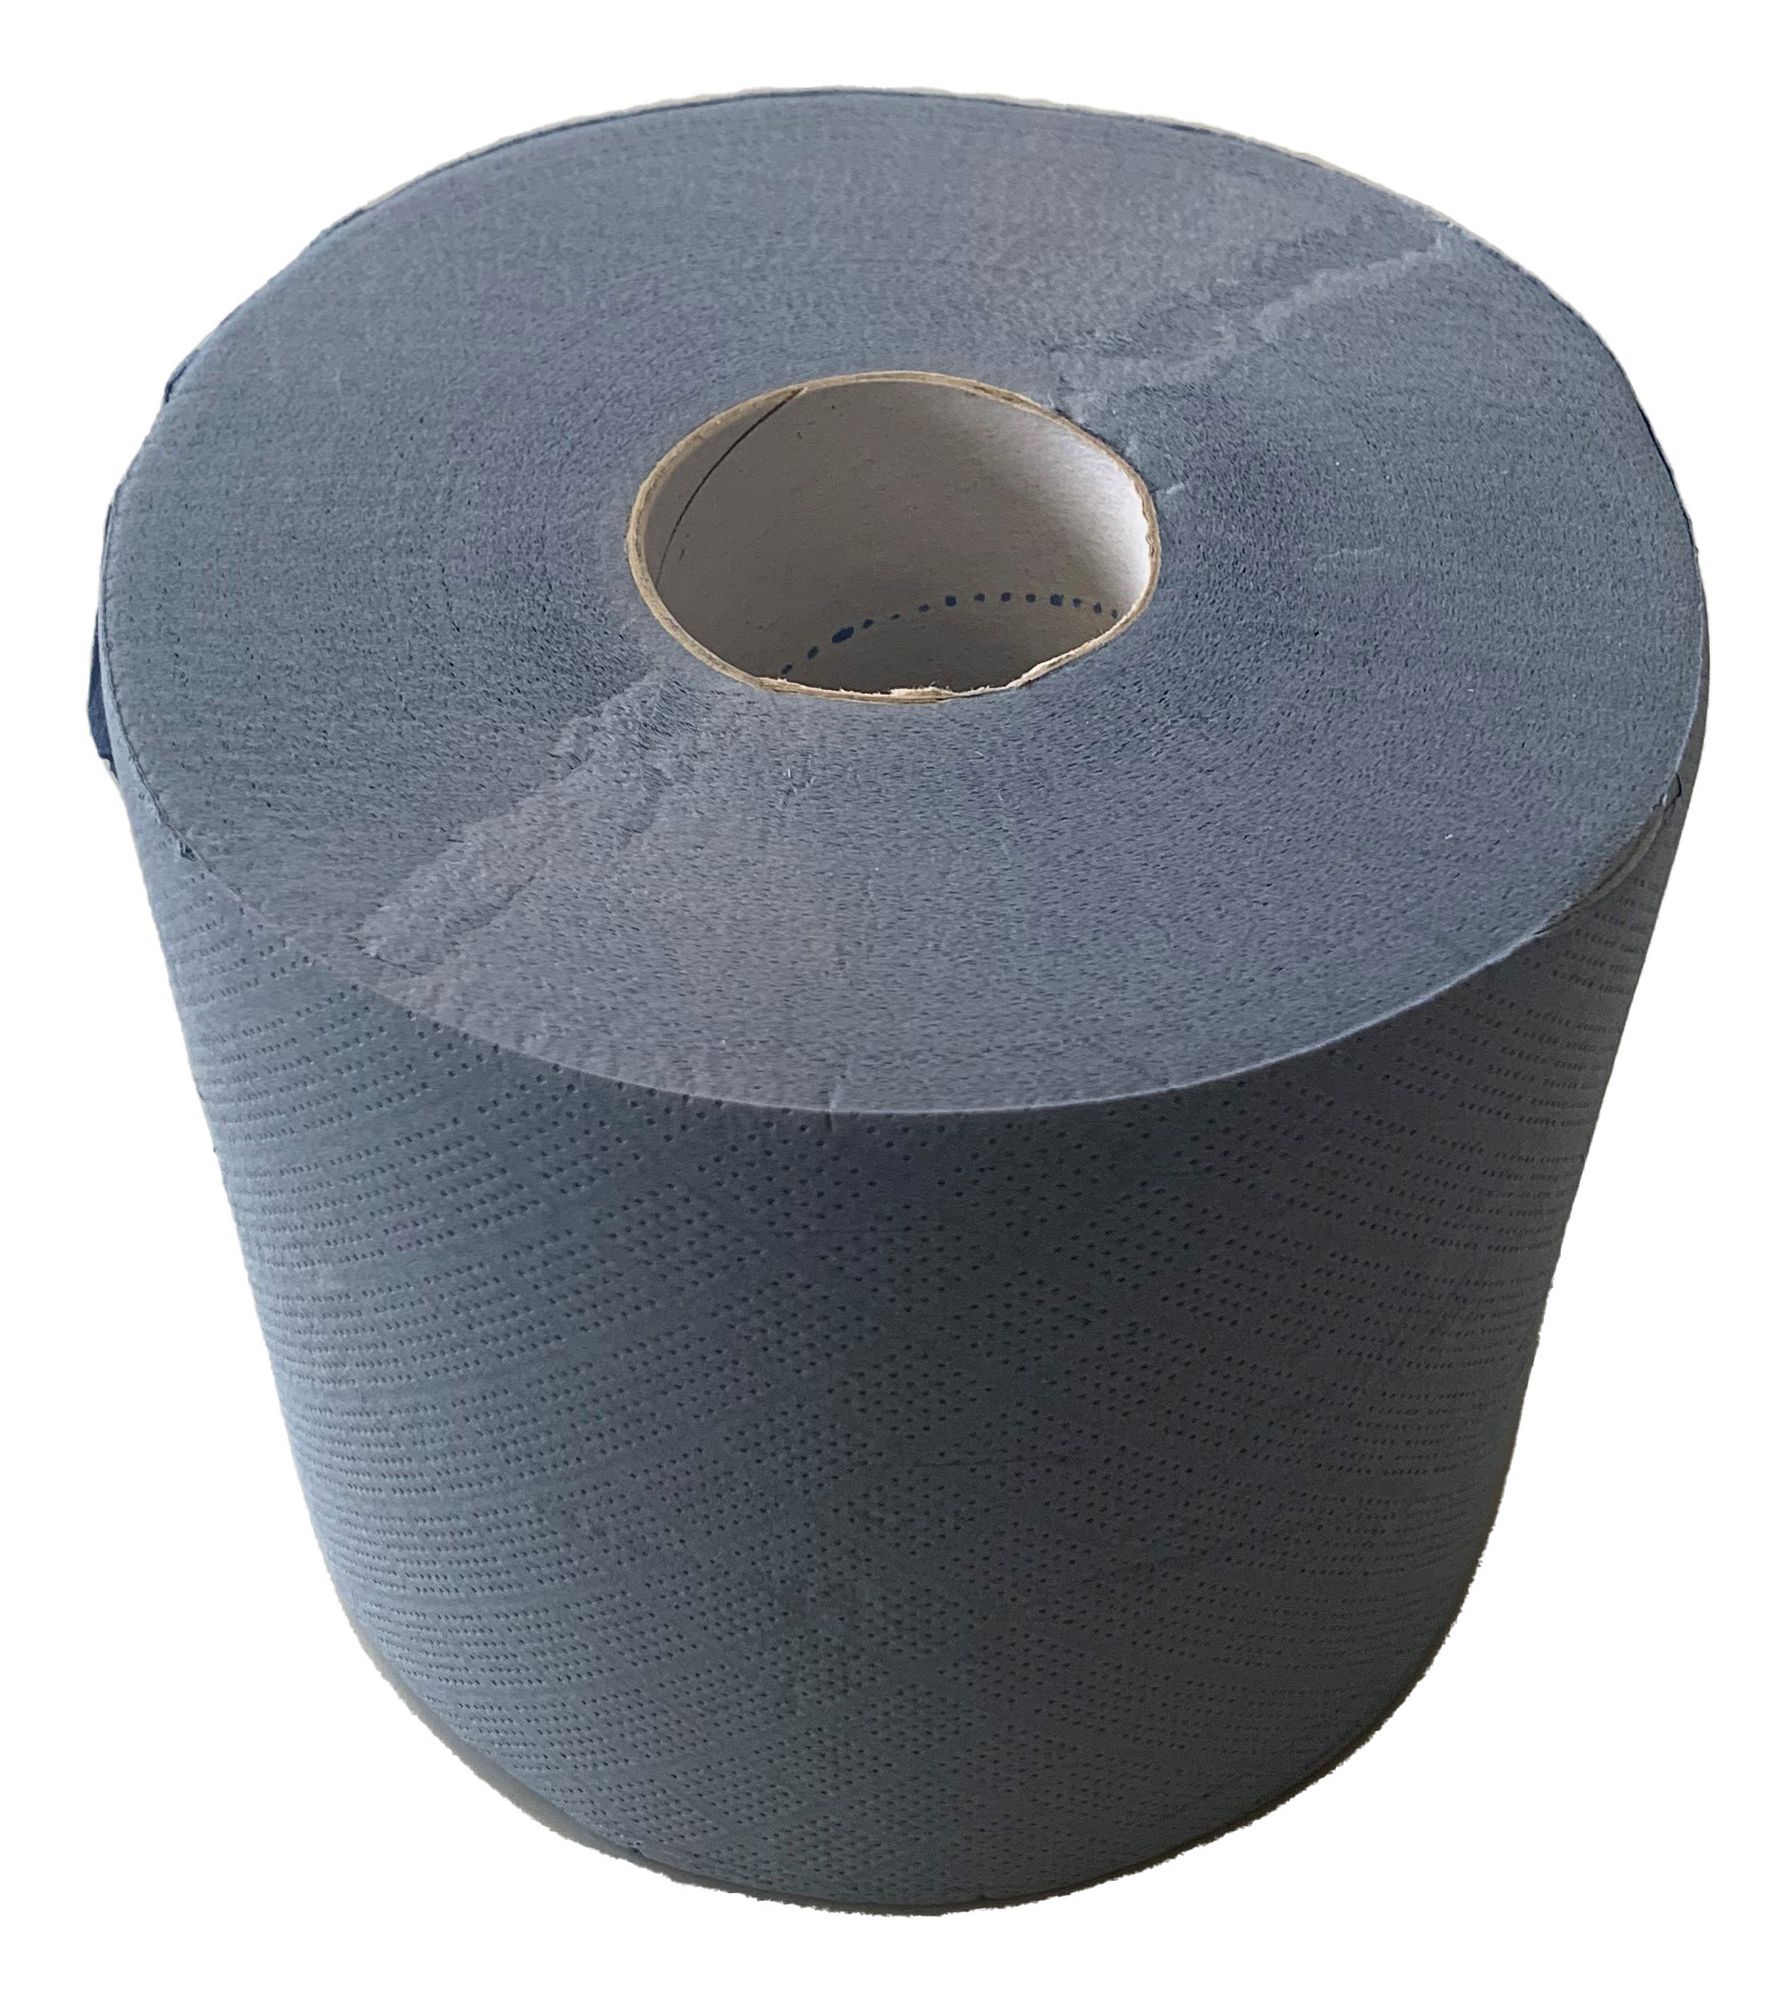 Paper Blue Paper roll